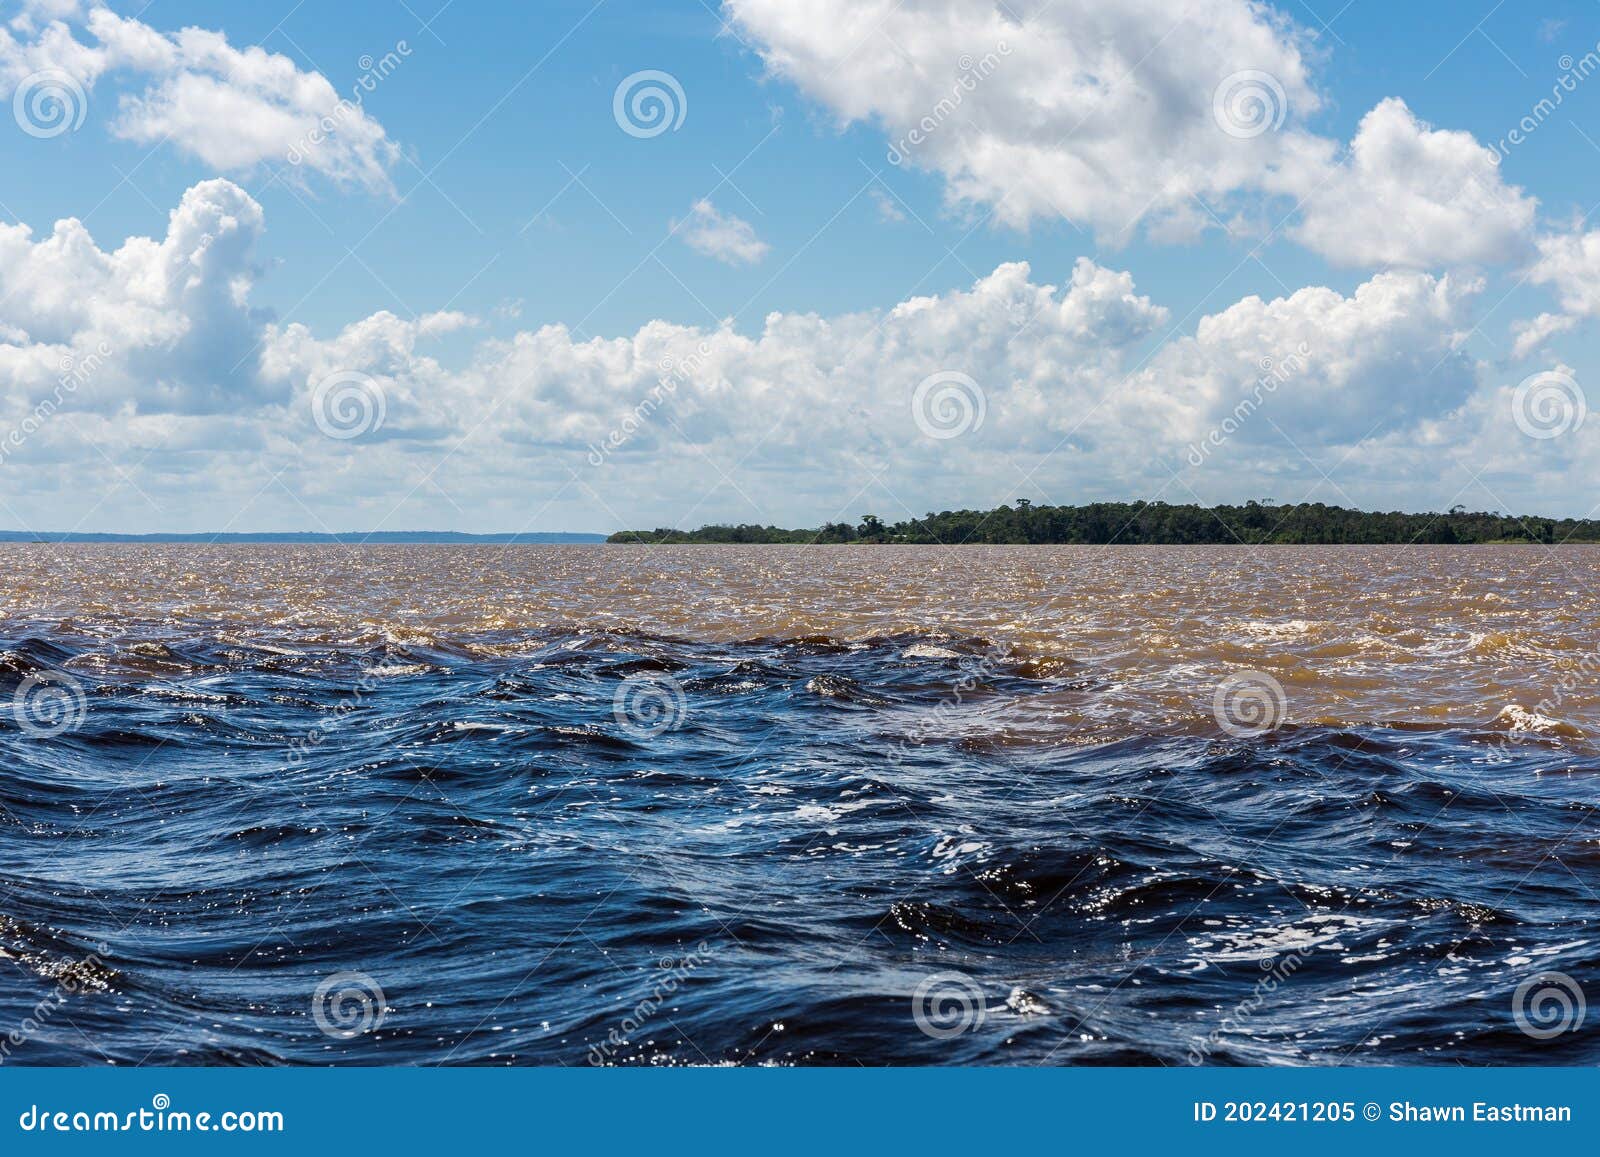 the meeting of waters encontro das ÃÂguas, a natural phenomenon with the rio negro blending with the amazon river in the state of